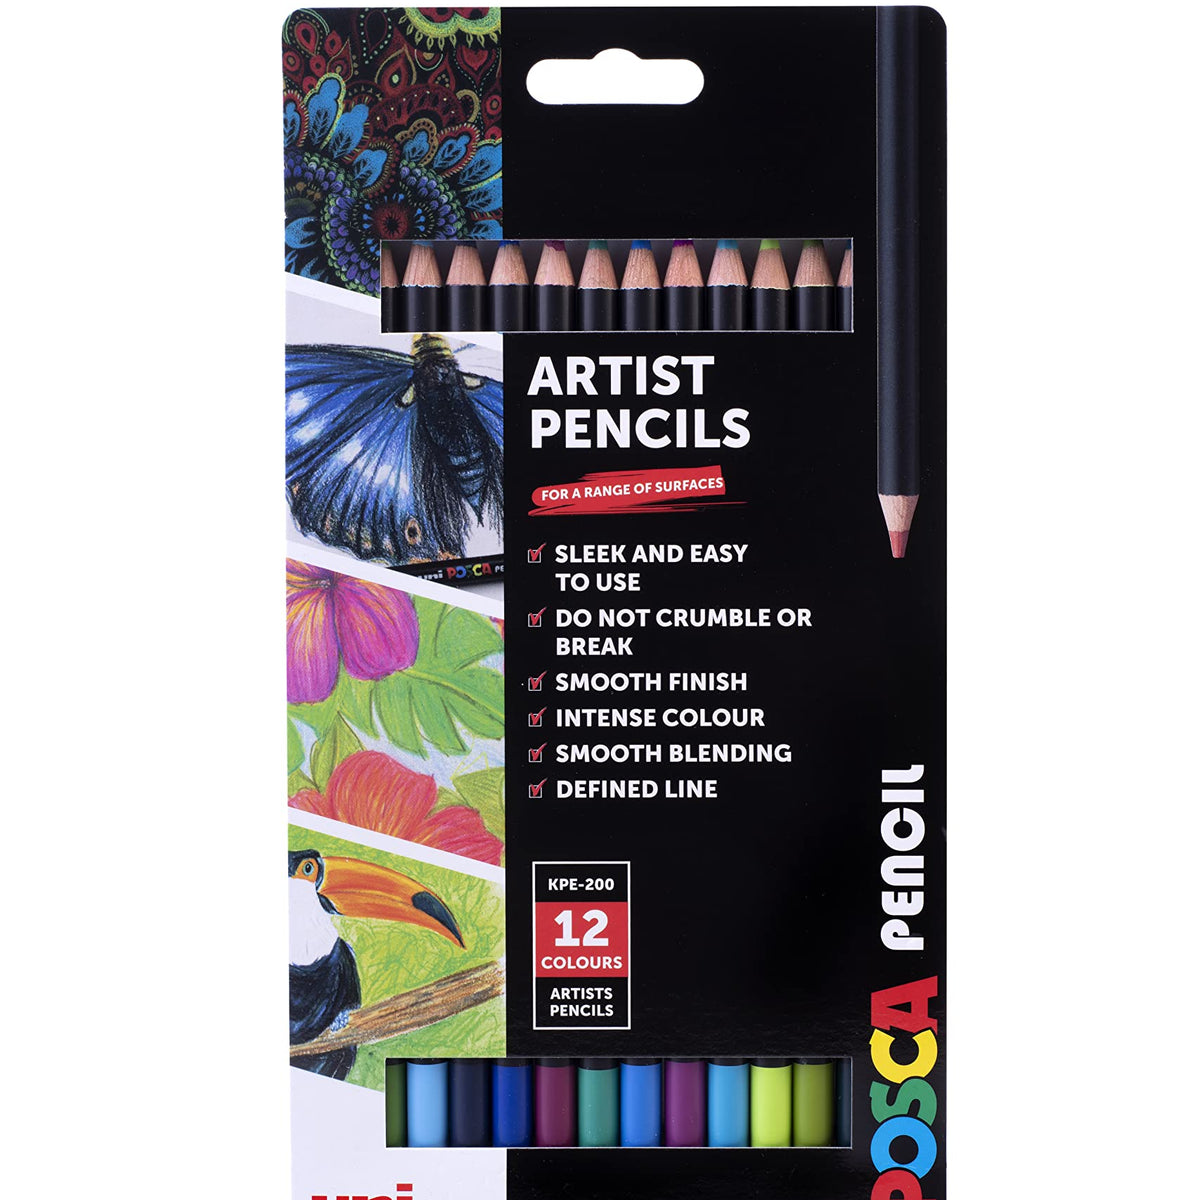 Uni Posca Oil/wax Pencil Packs Blendable Vivid Artist Colouring